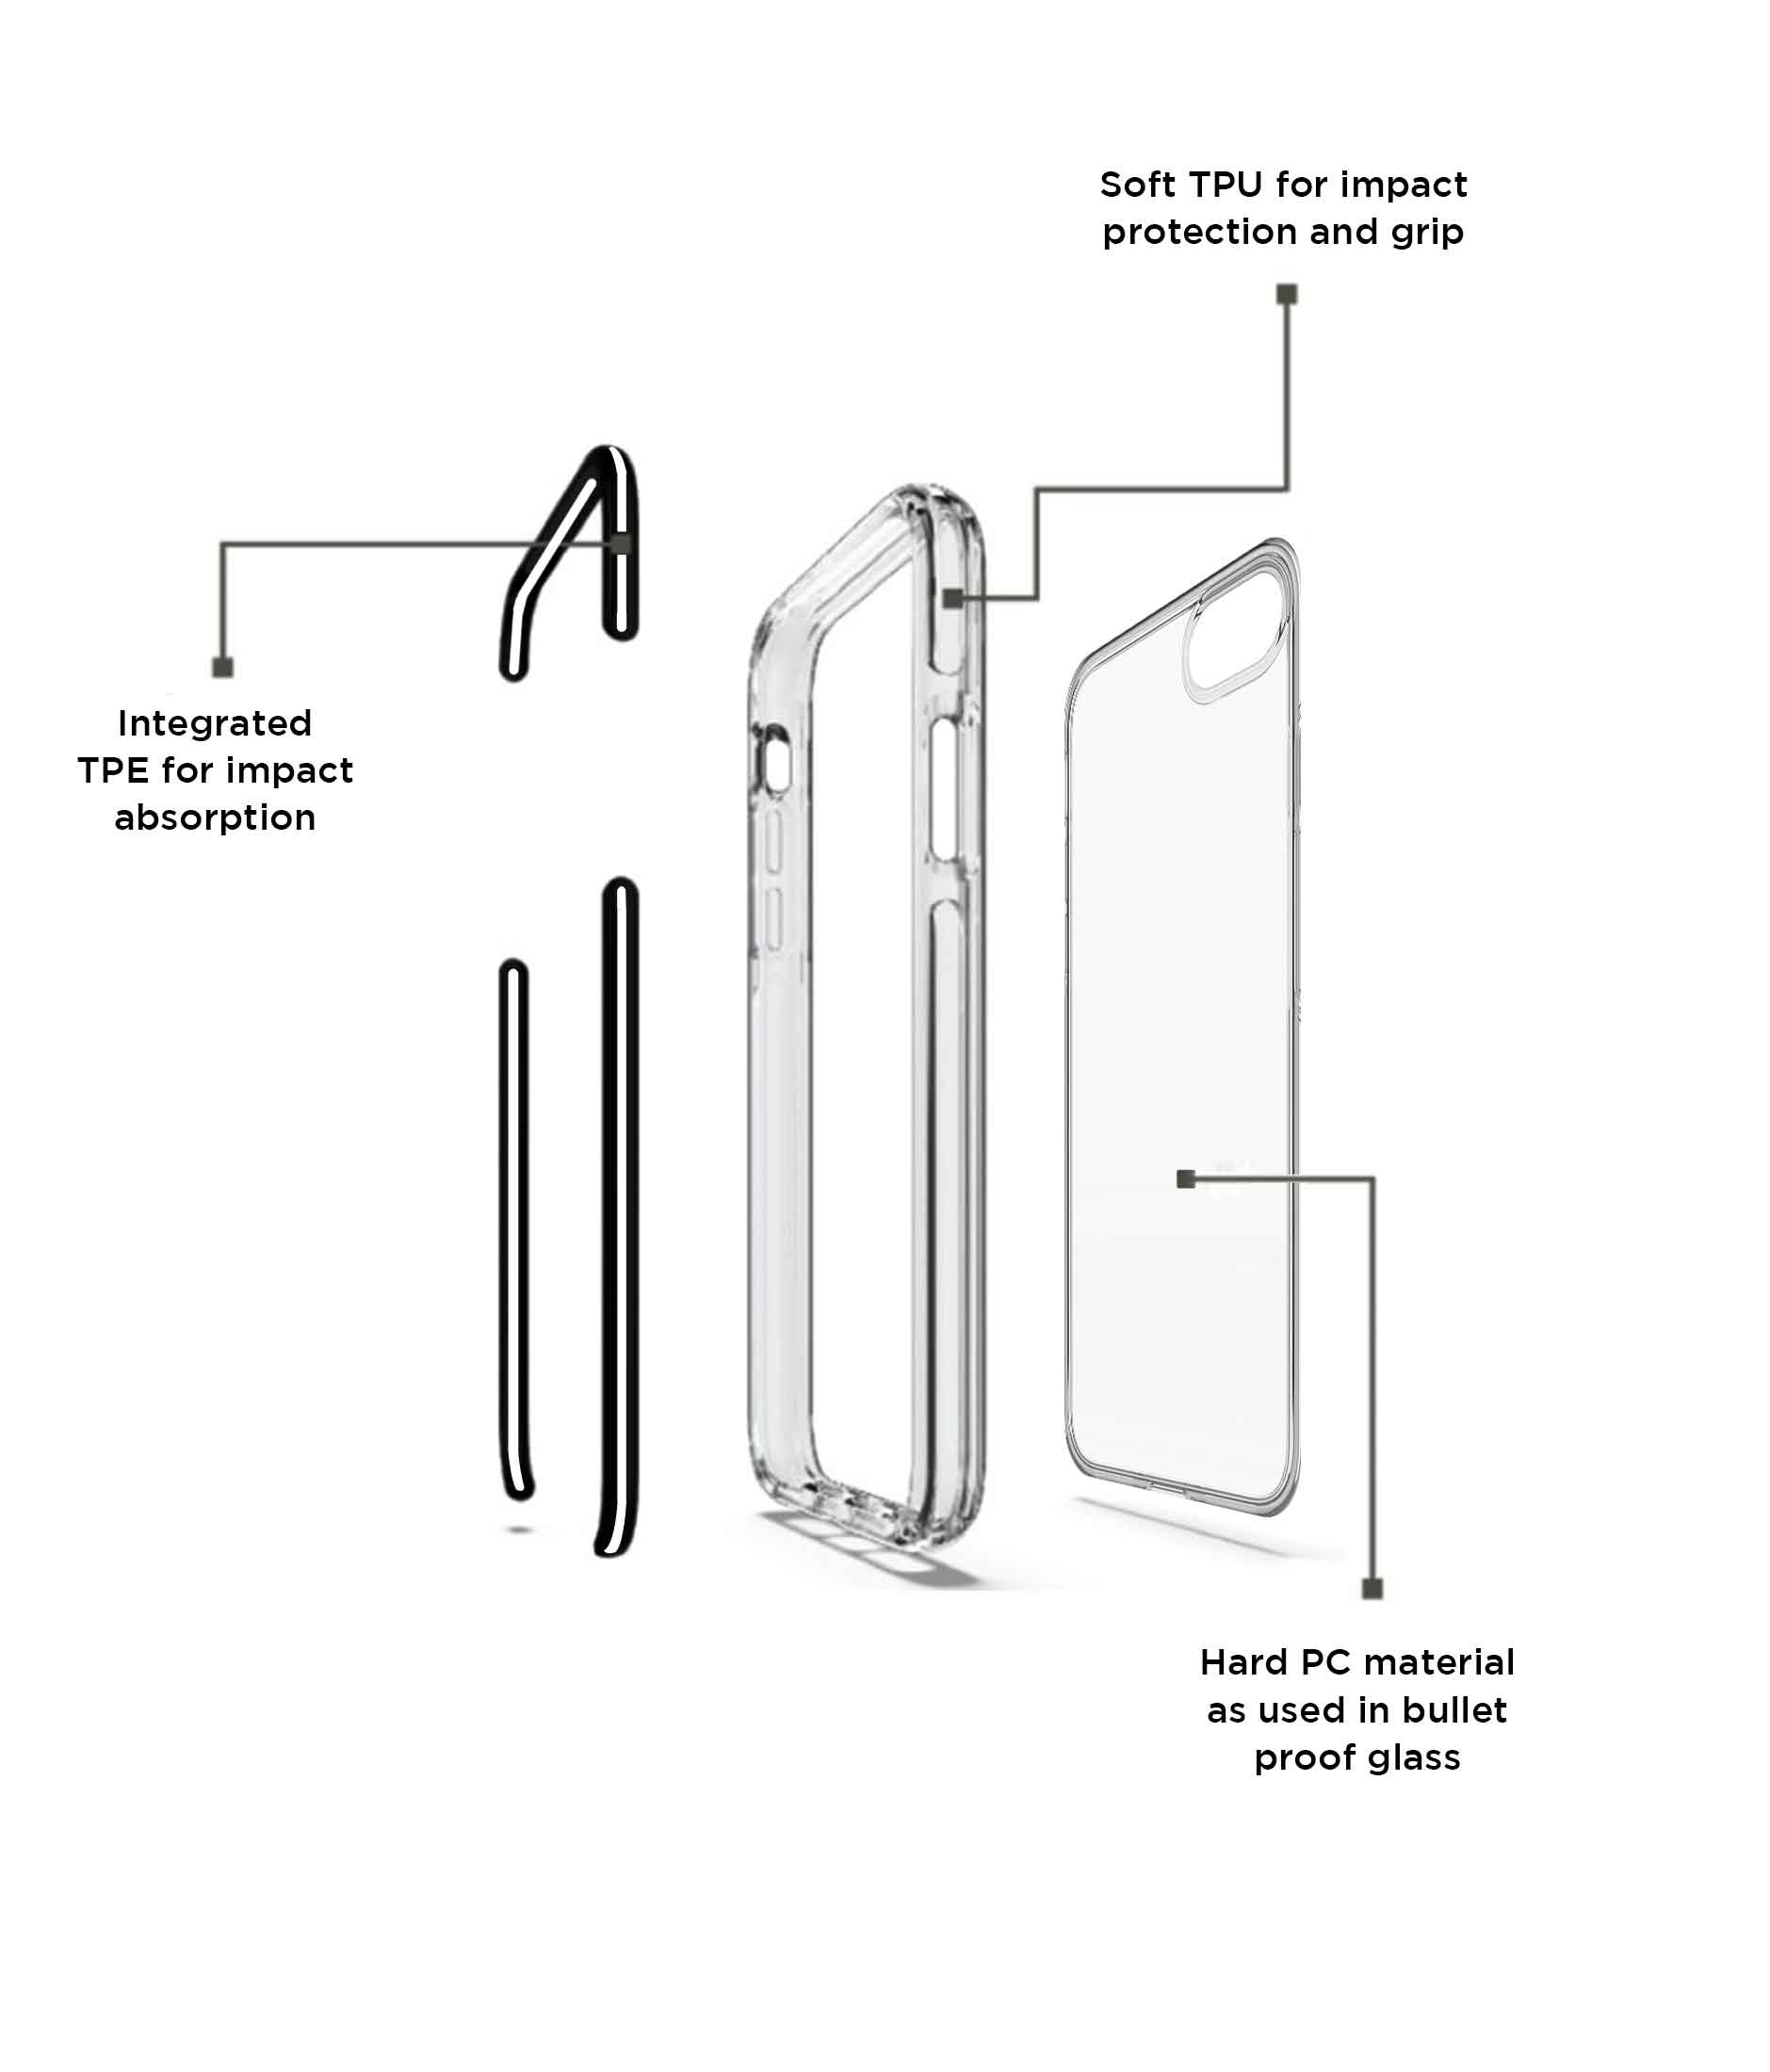 Batman Geometric - Extreme Phone Case for iPhone 7 Plus